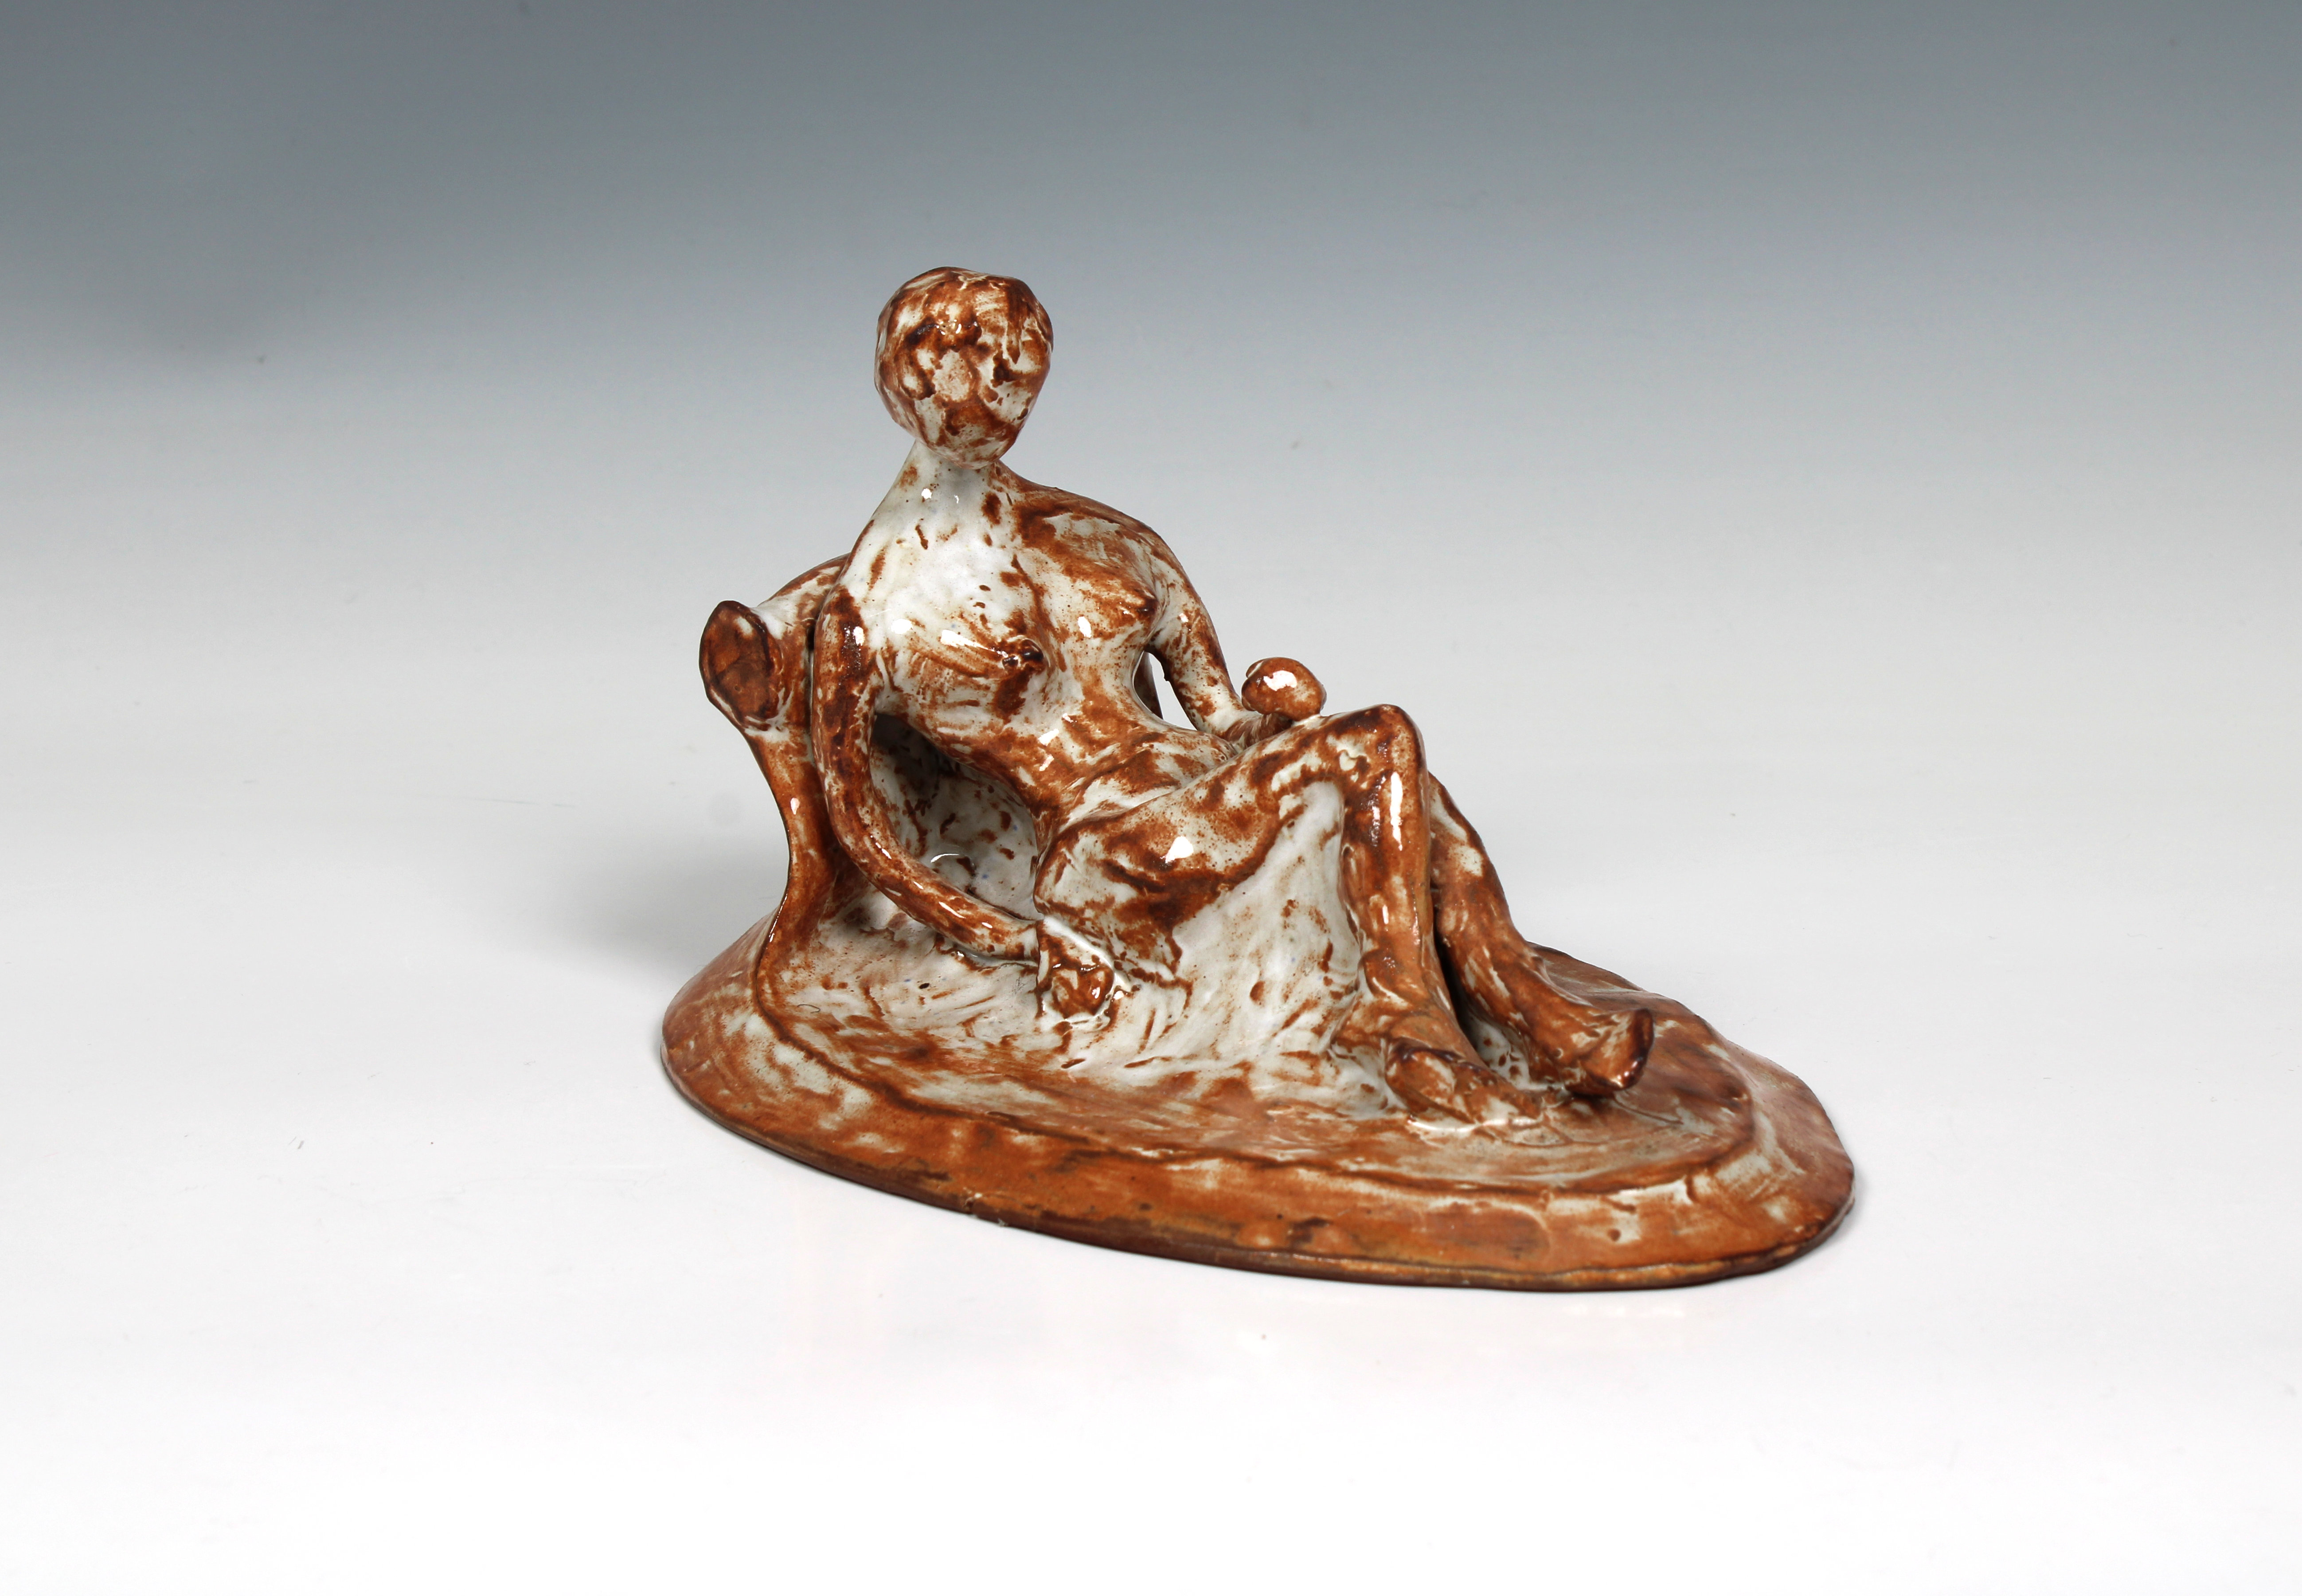 Elizabeth Ann Macphail (1939-89) A reclining nude sculpture